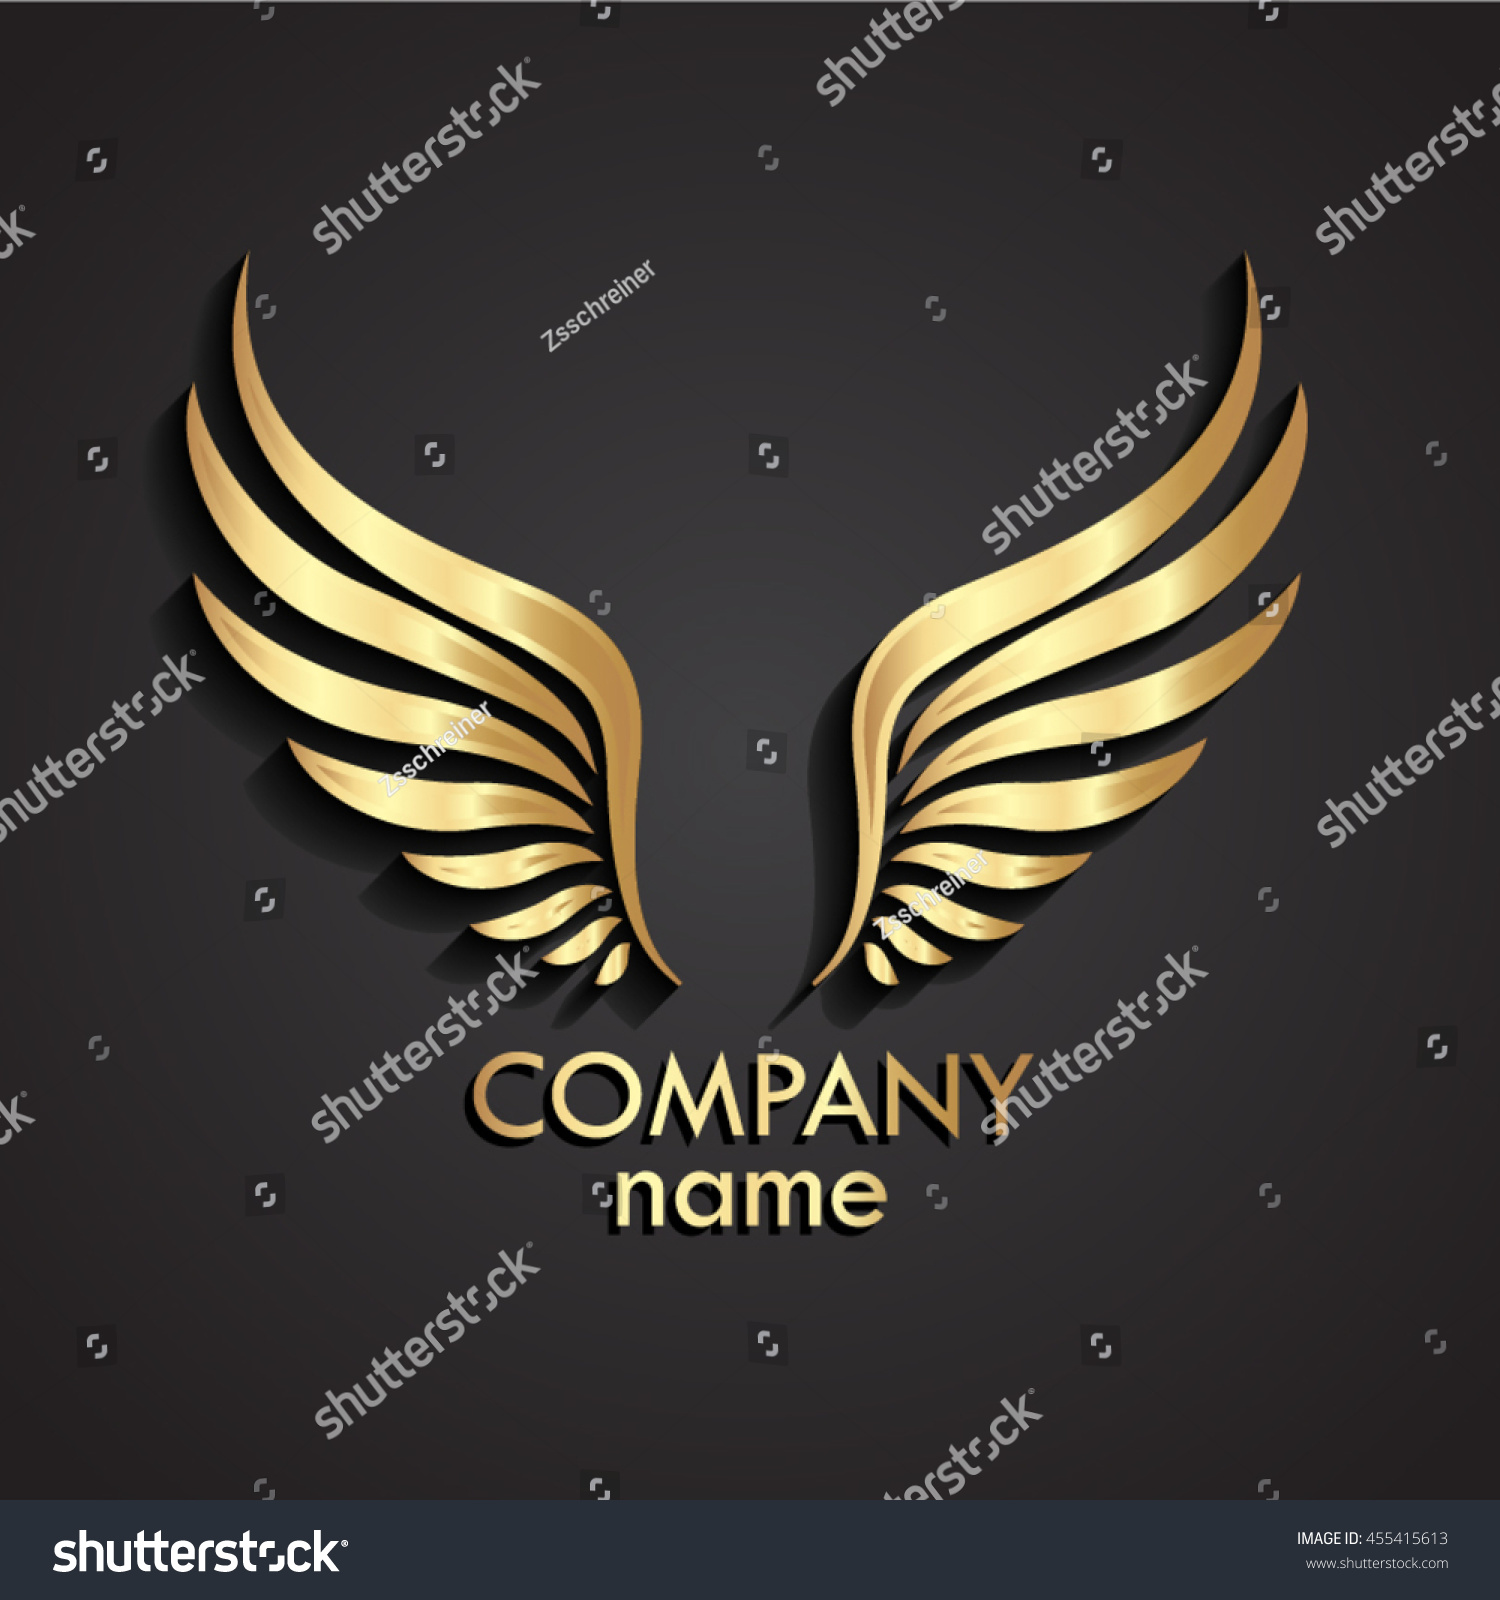 Download 3d Wings Gold Logo Vector Illustration Stock Vector ...